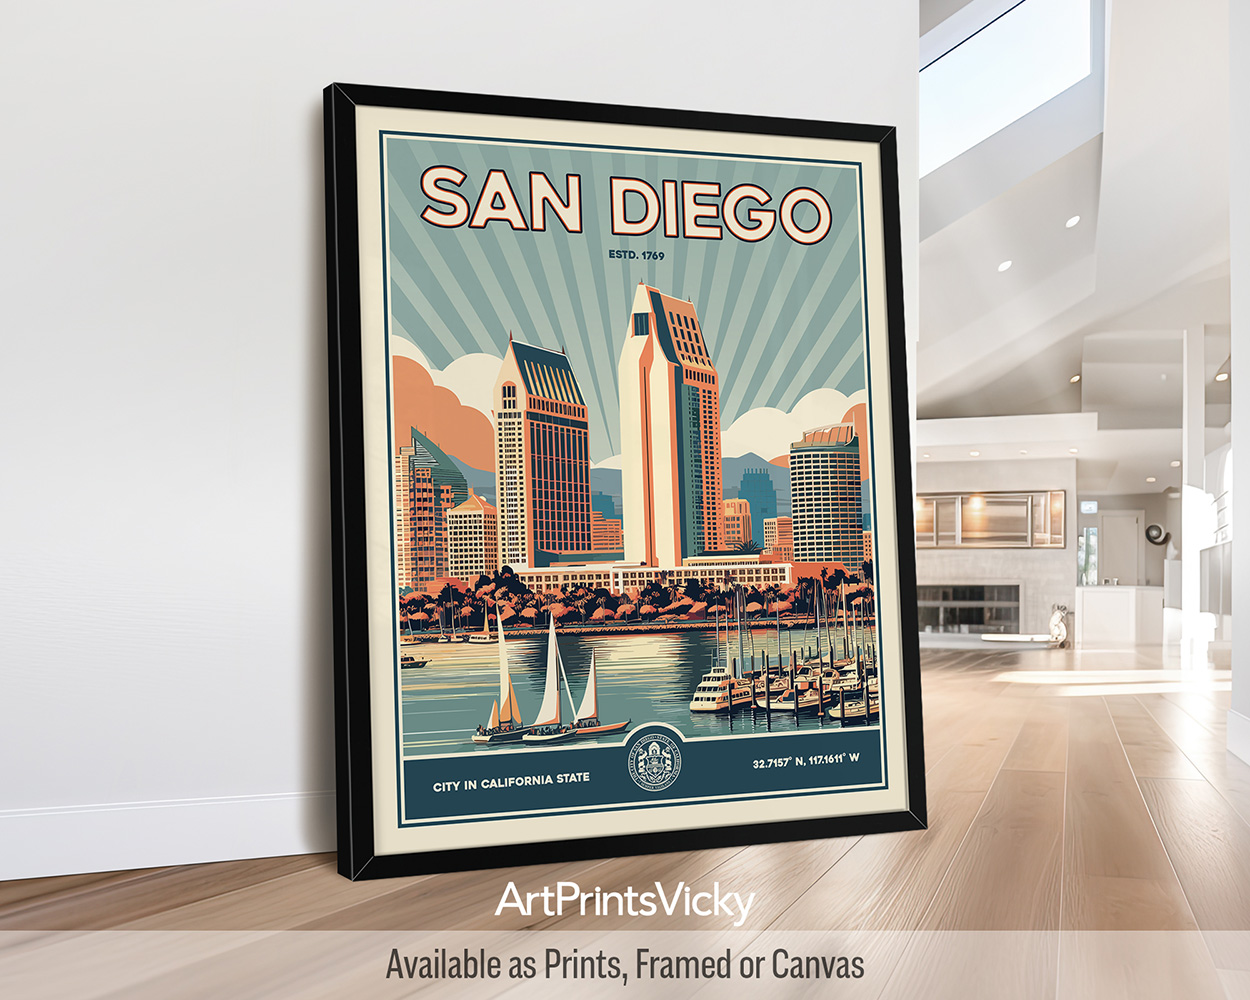 San Diego Print Inspired by Retro Travel Art by ArtPrintsVicky